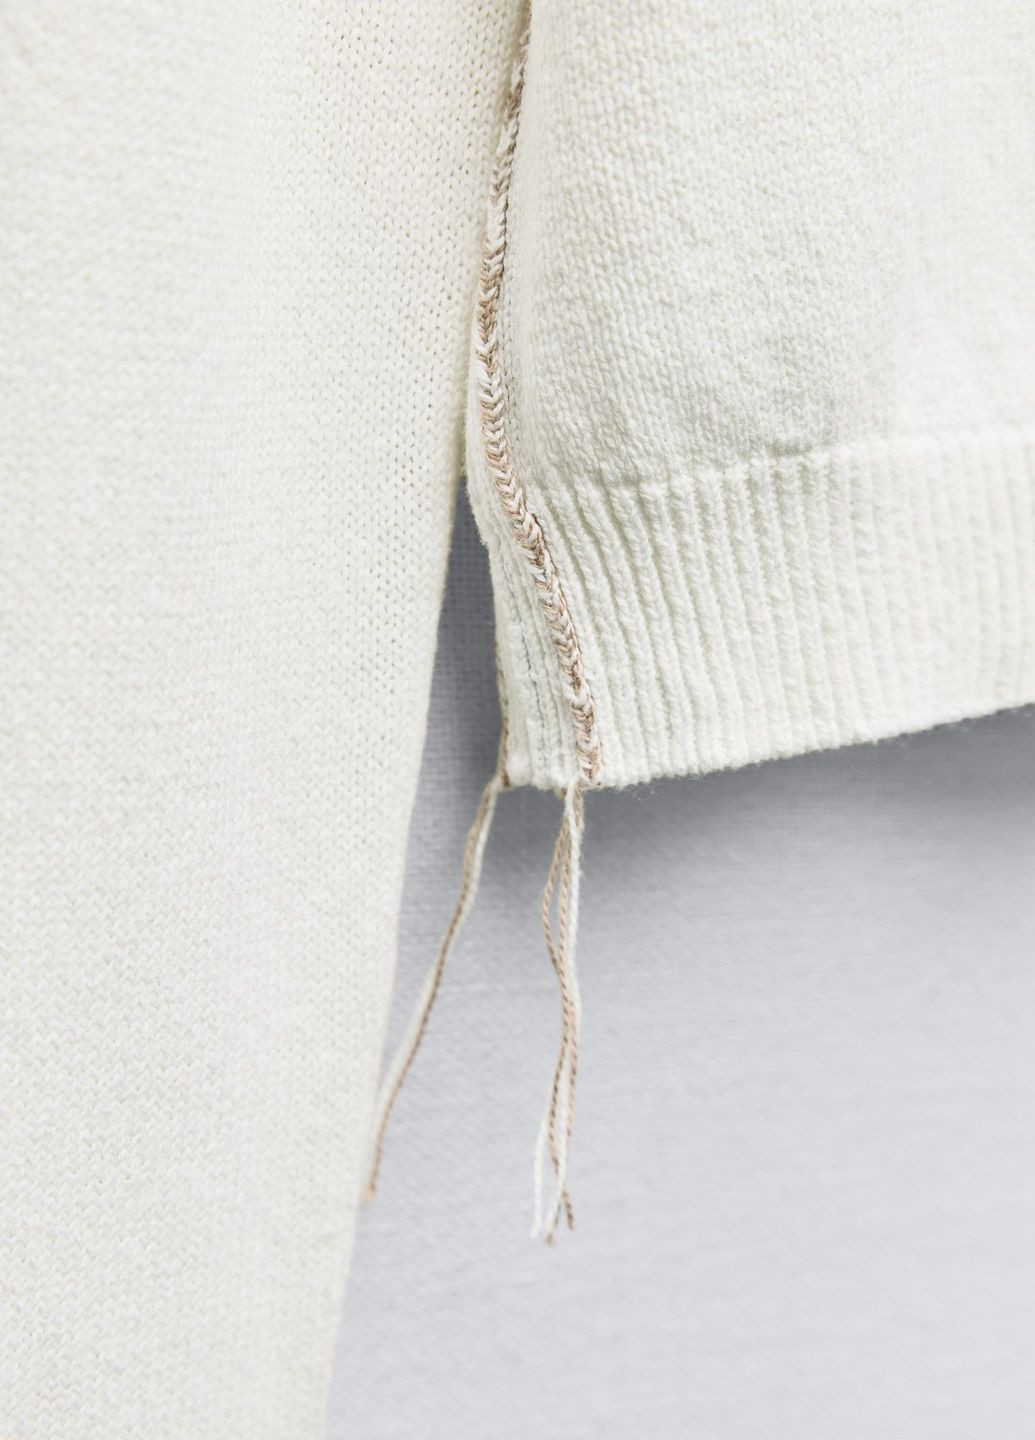 Белый демисезонный свитер Zara